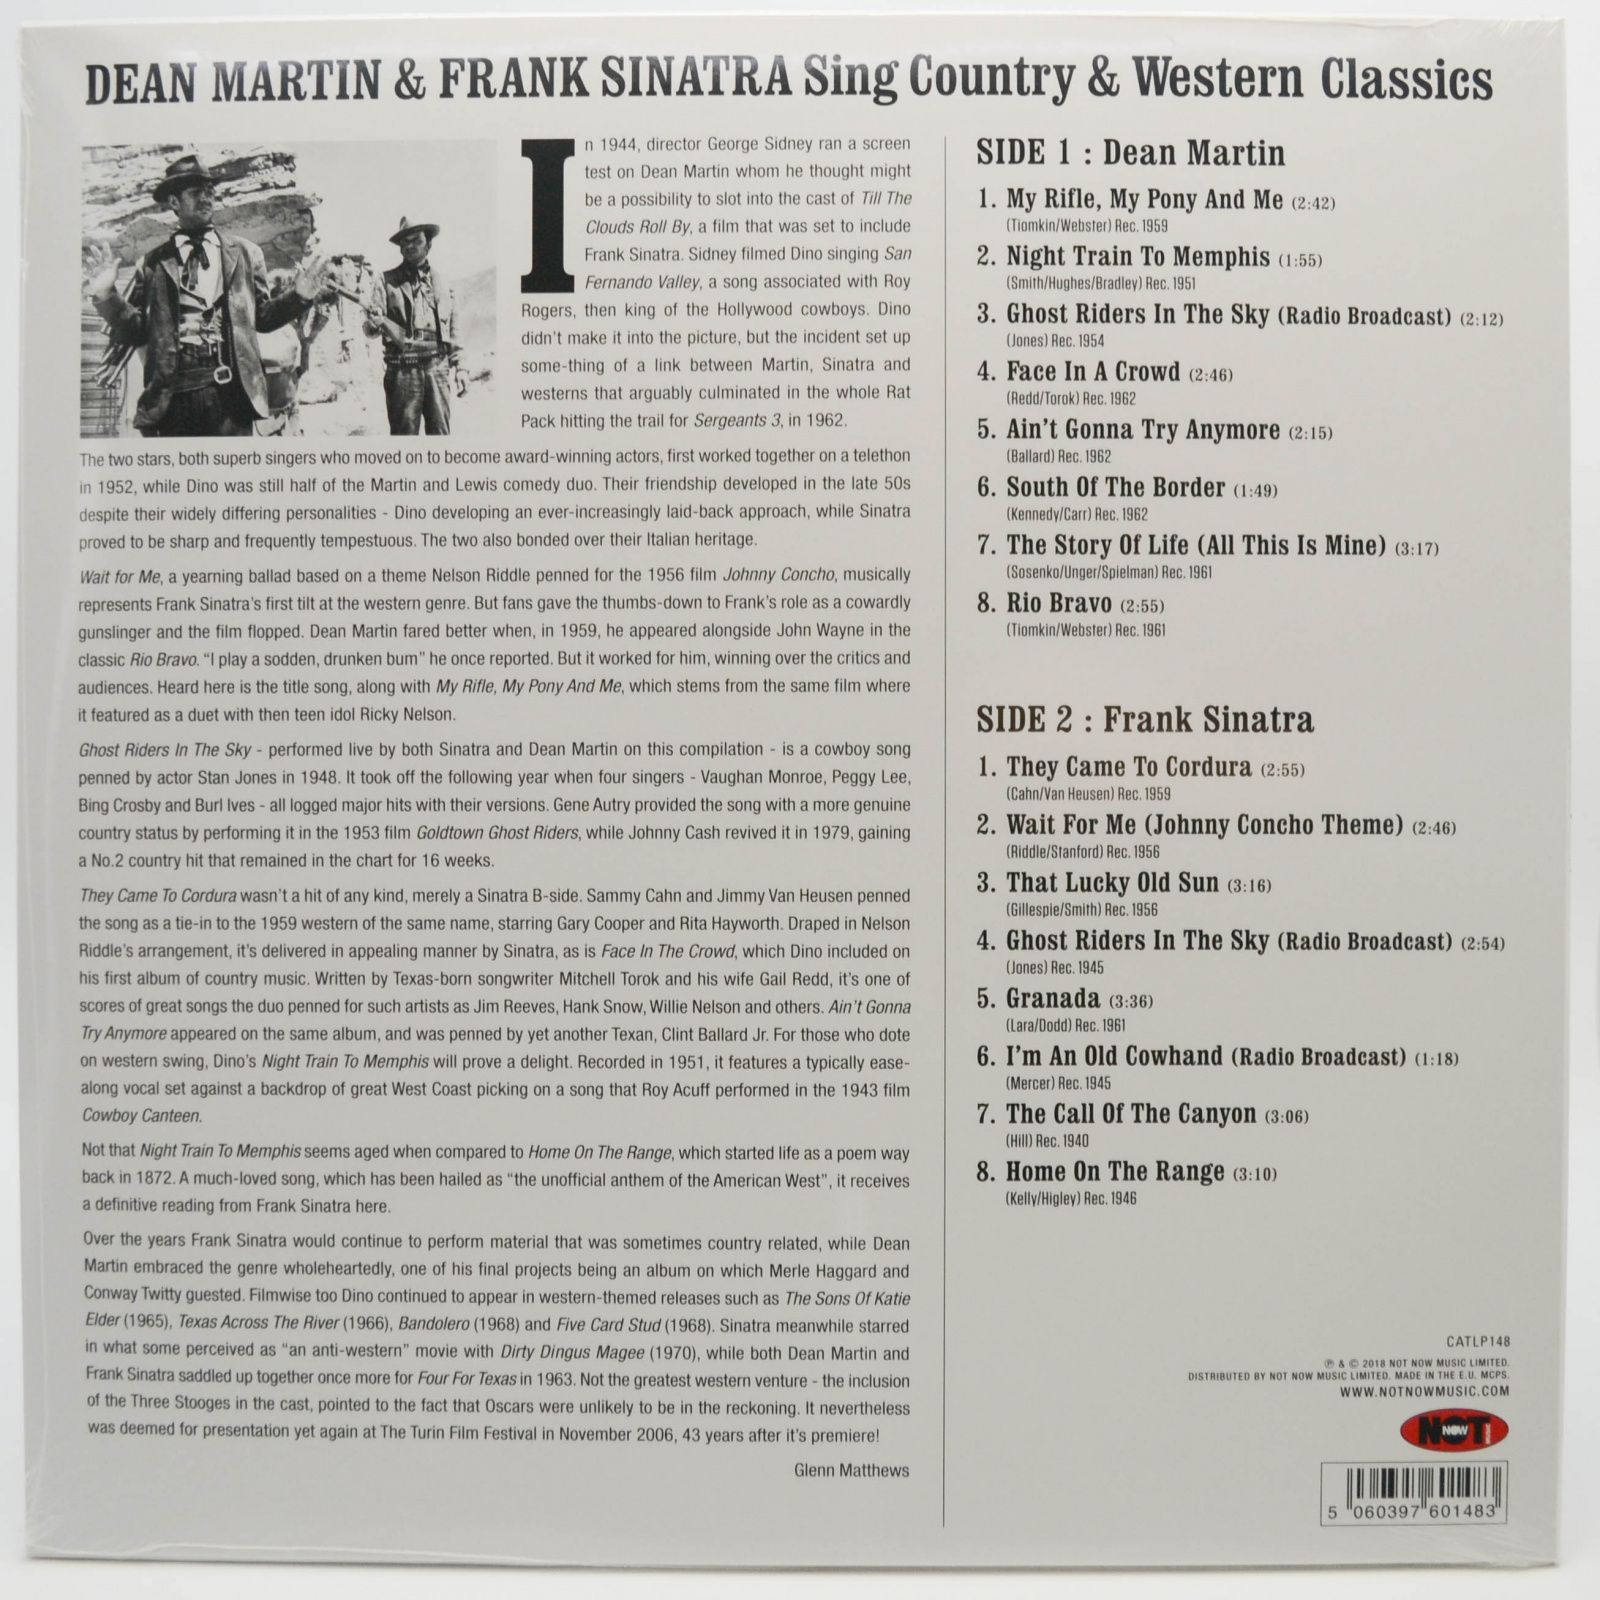 Dean Martin & Frank Sinatra — Sing Country & Western Classics, 2018